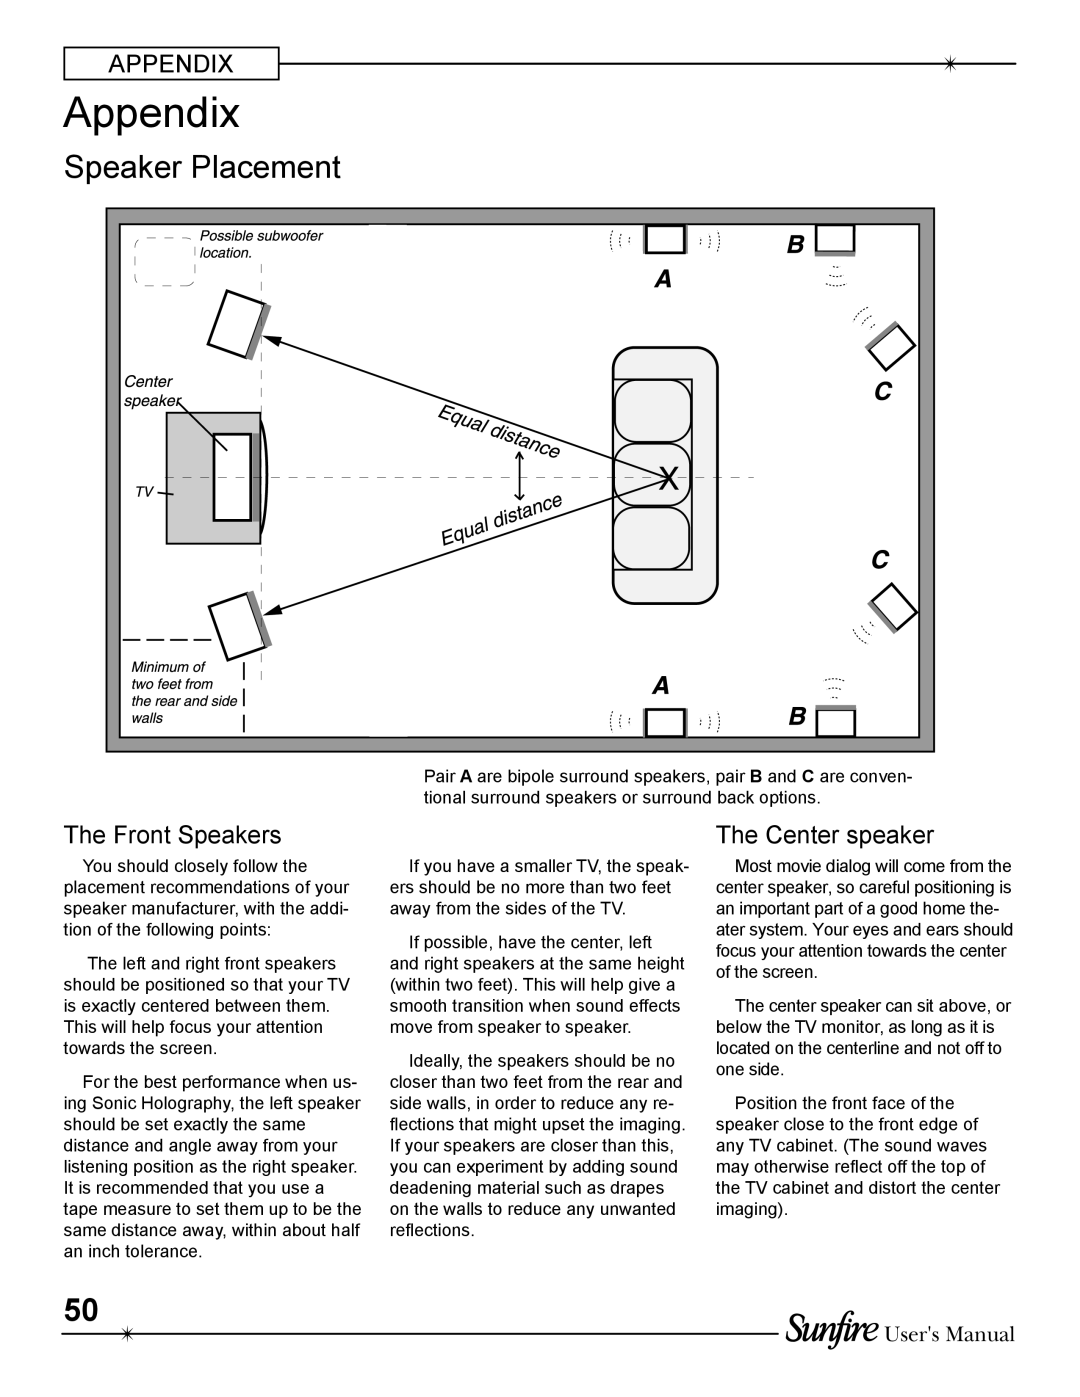 Sunfire TGR-401-230 manual Appendix, Speaker Placement, Users Manual 